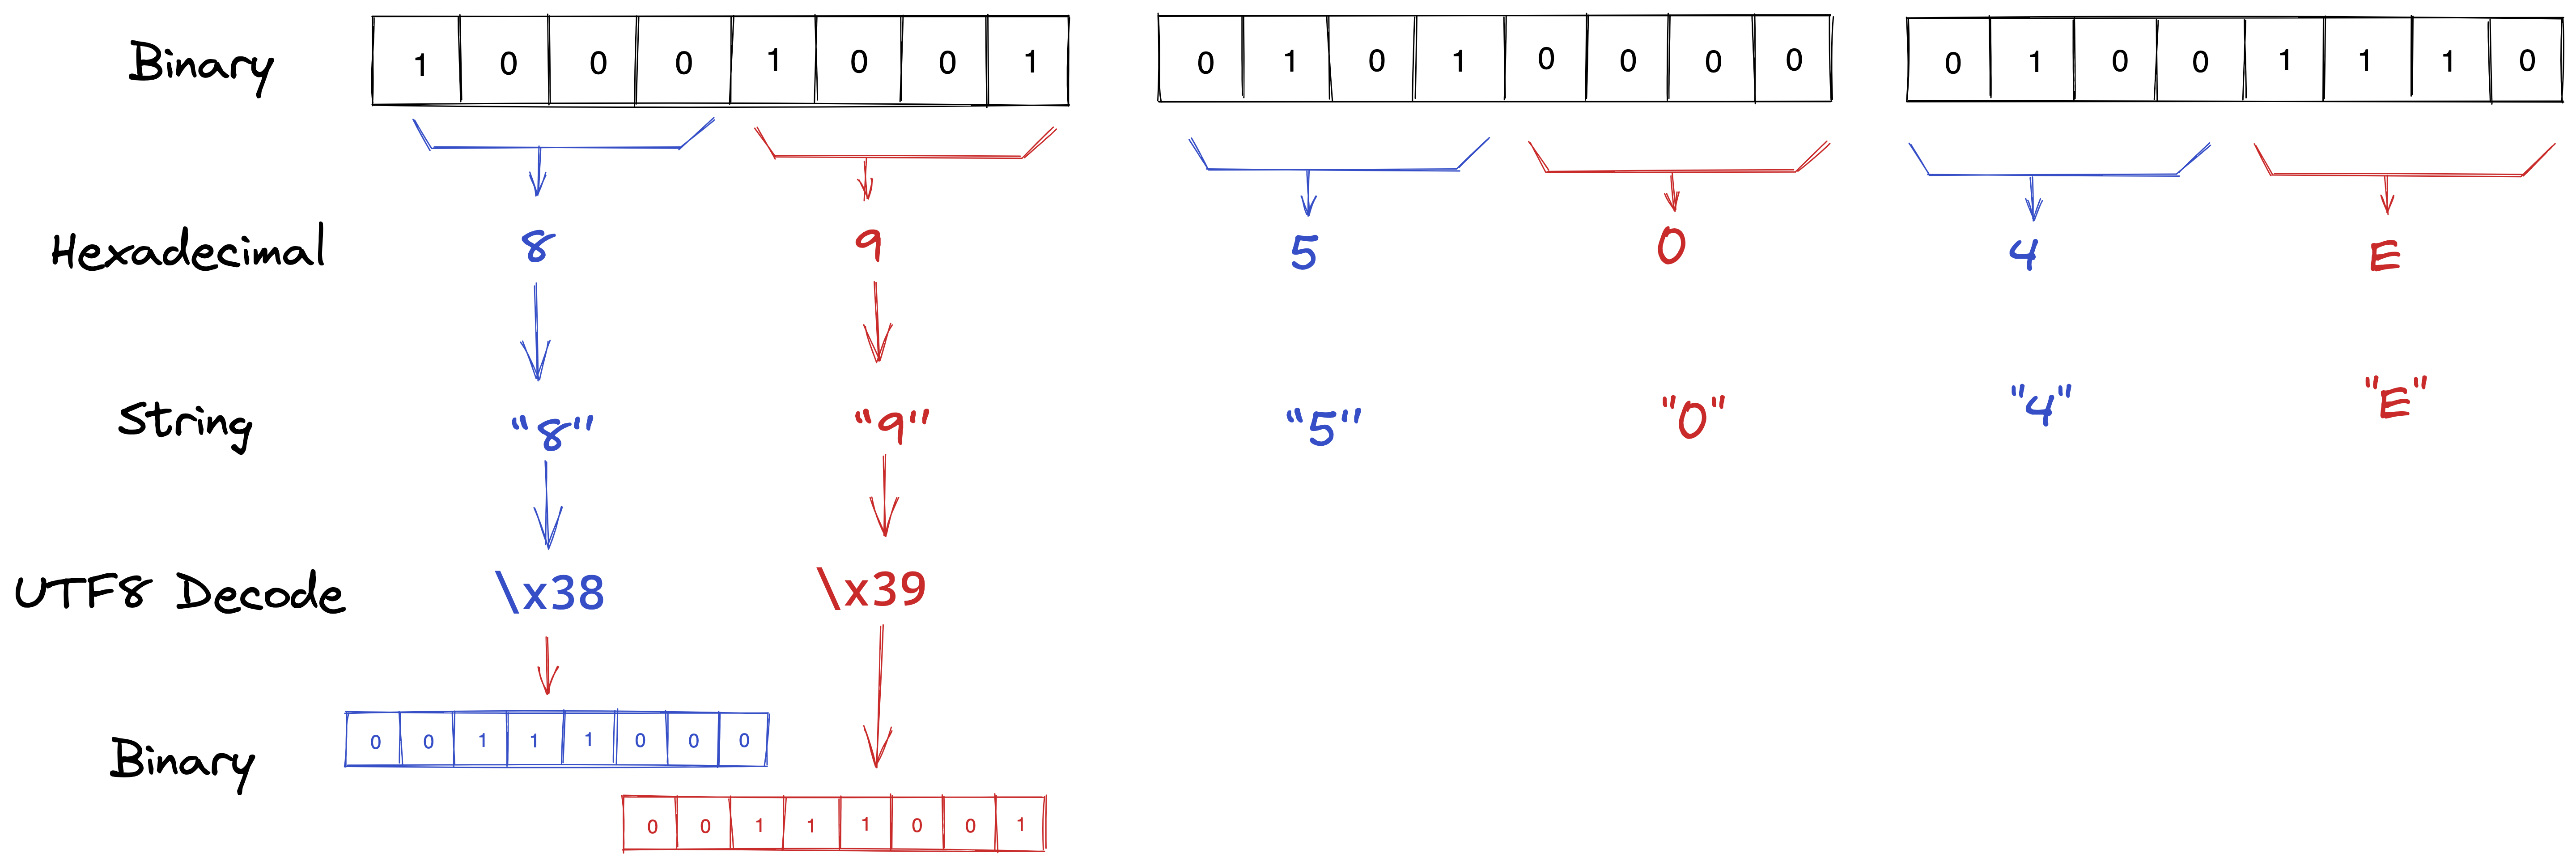 Understand Base64 Encoding with Diagrams | by Shuai Li | Medium